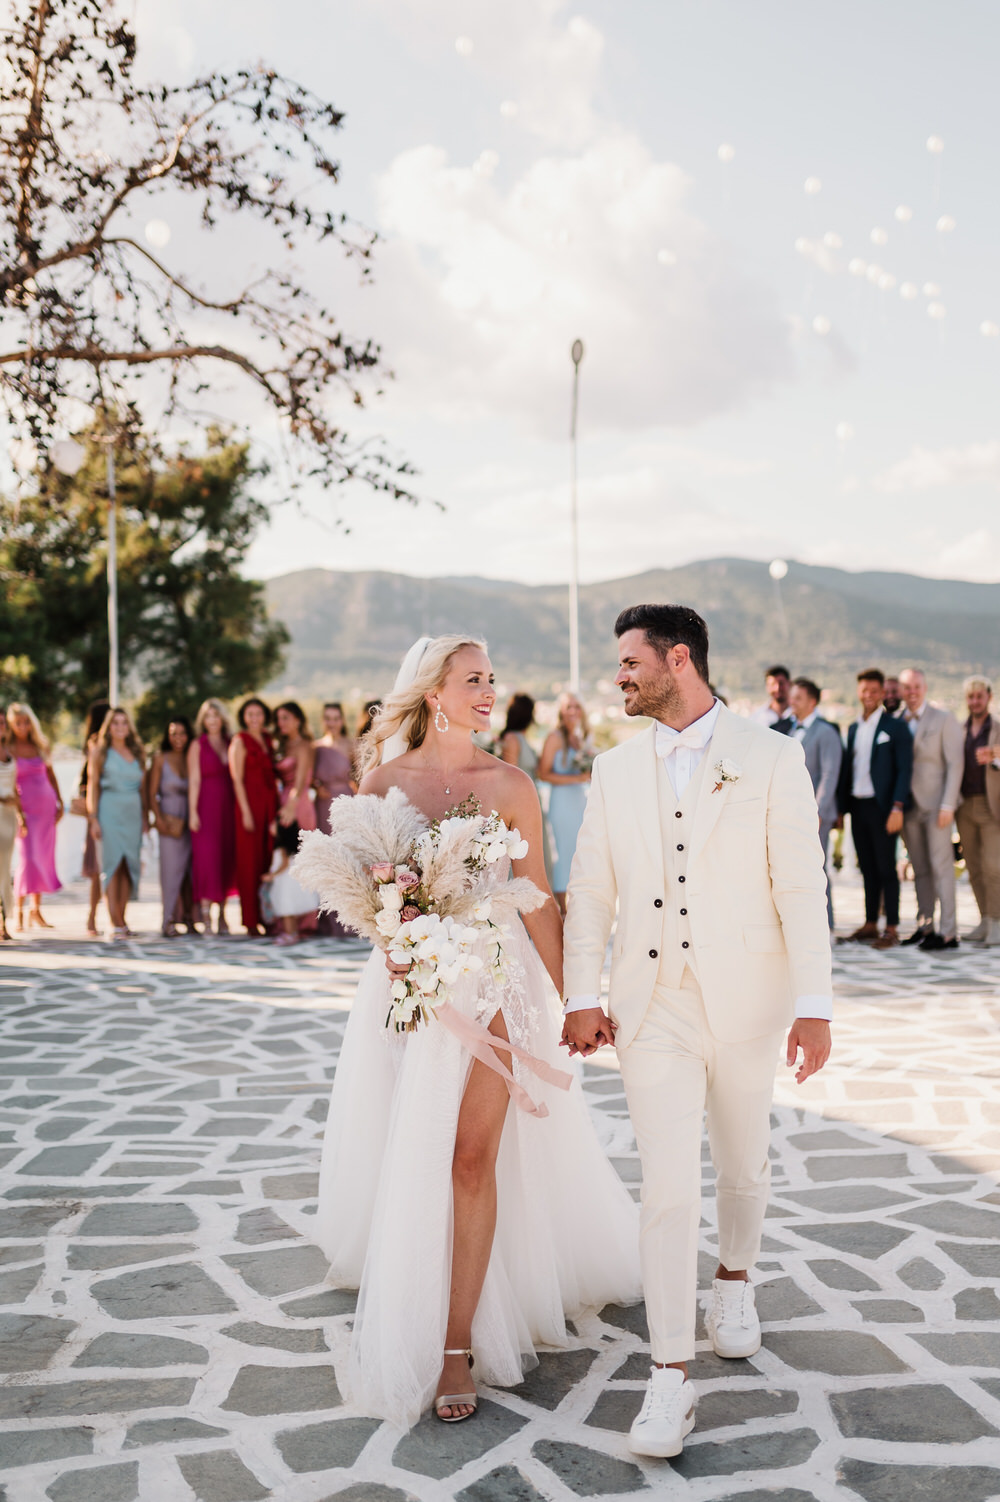 Professional wedding photography in Santorini, Greece by Albatross